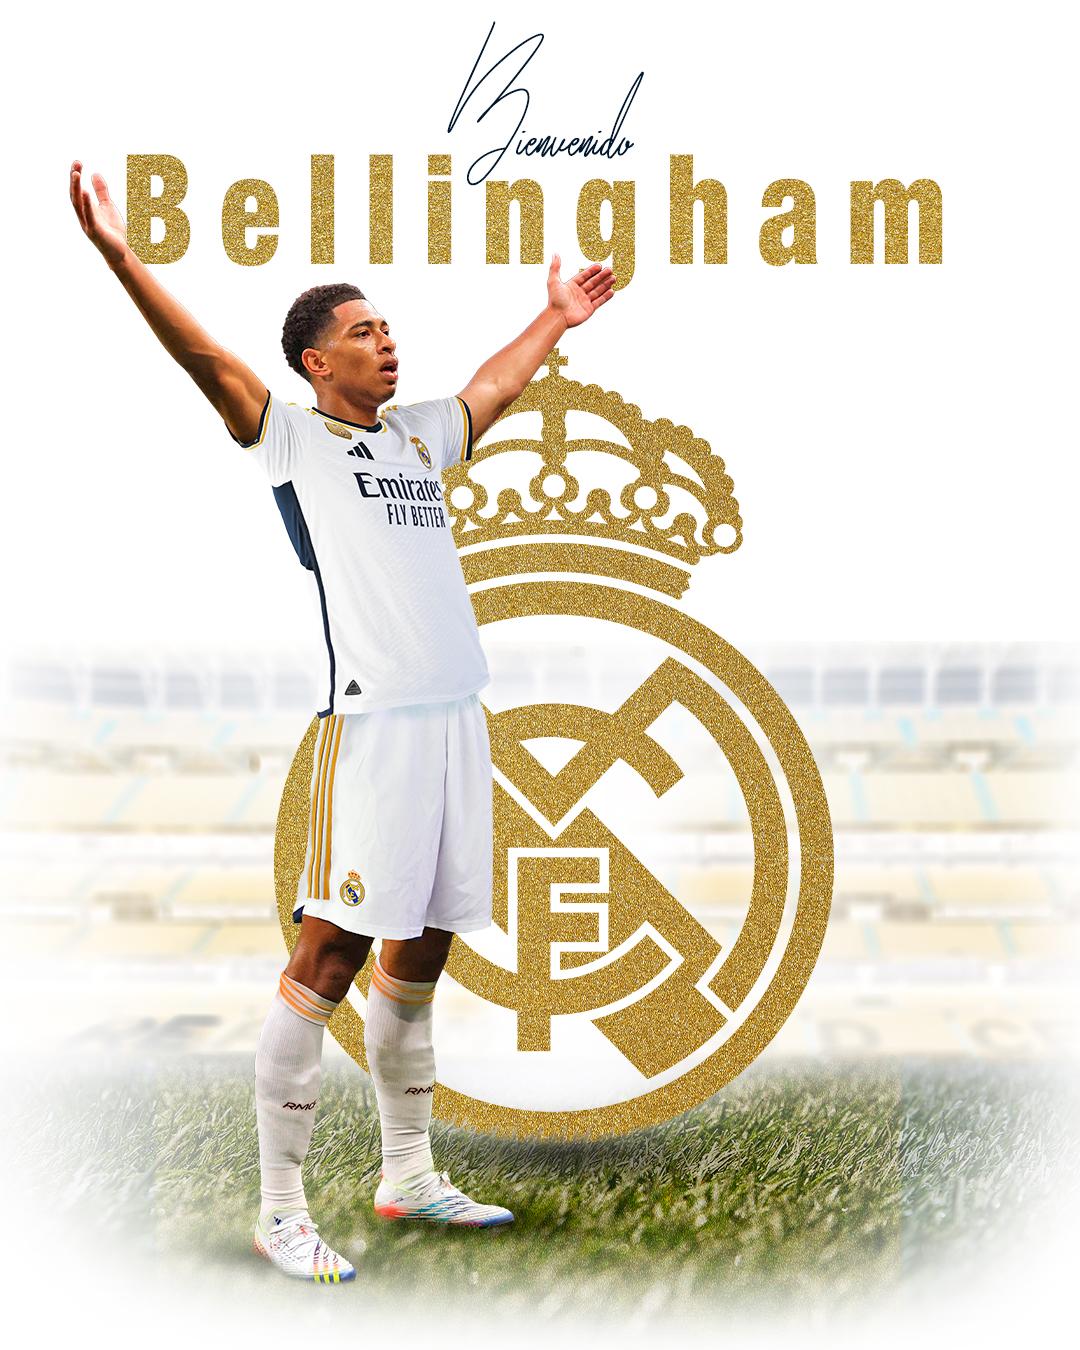 El Real Madrid confirma el fichaje de Bellingham